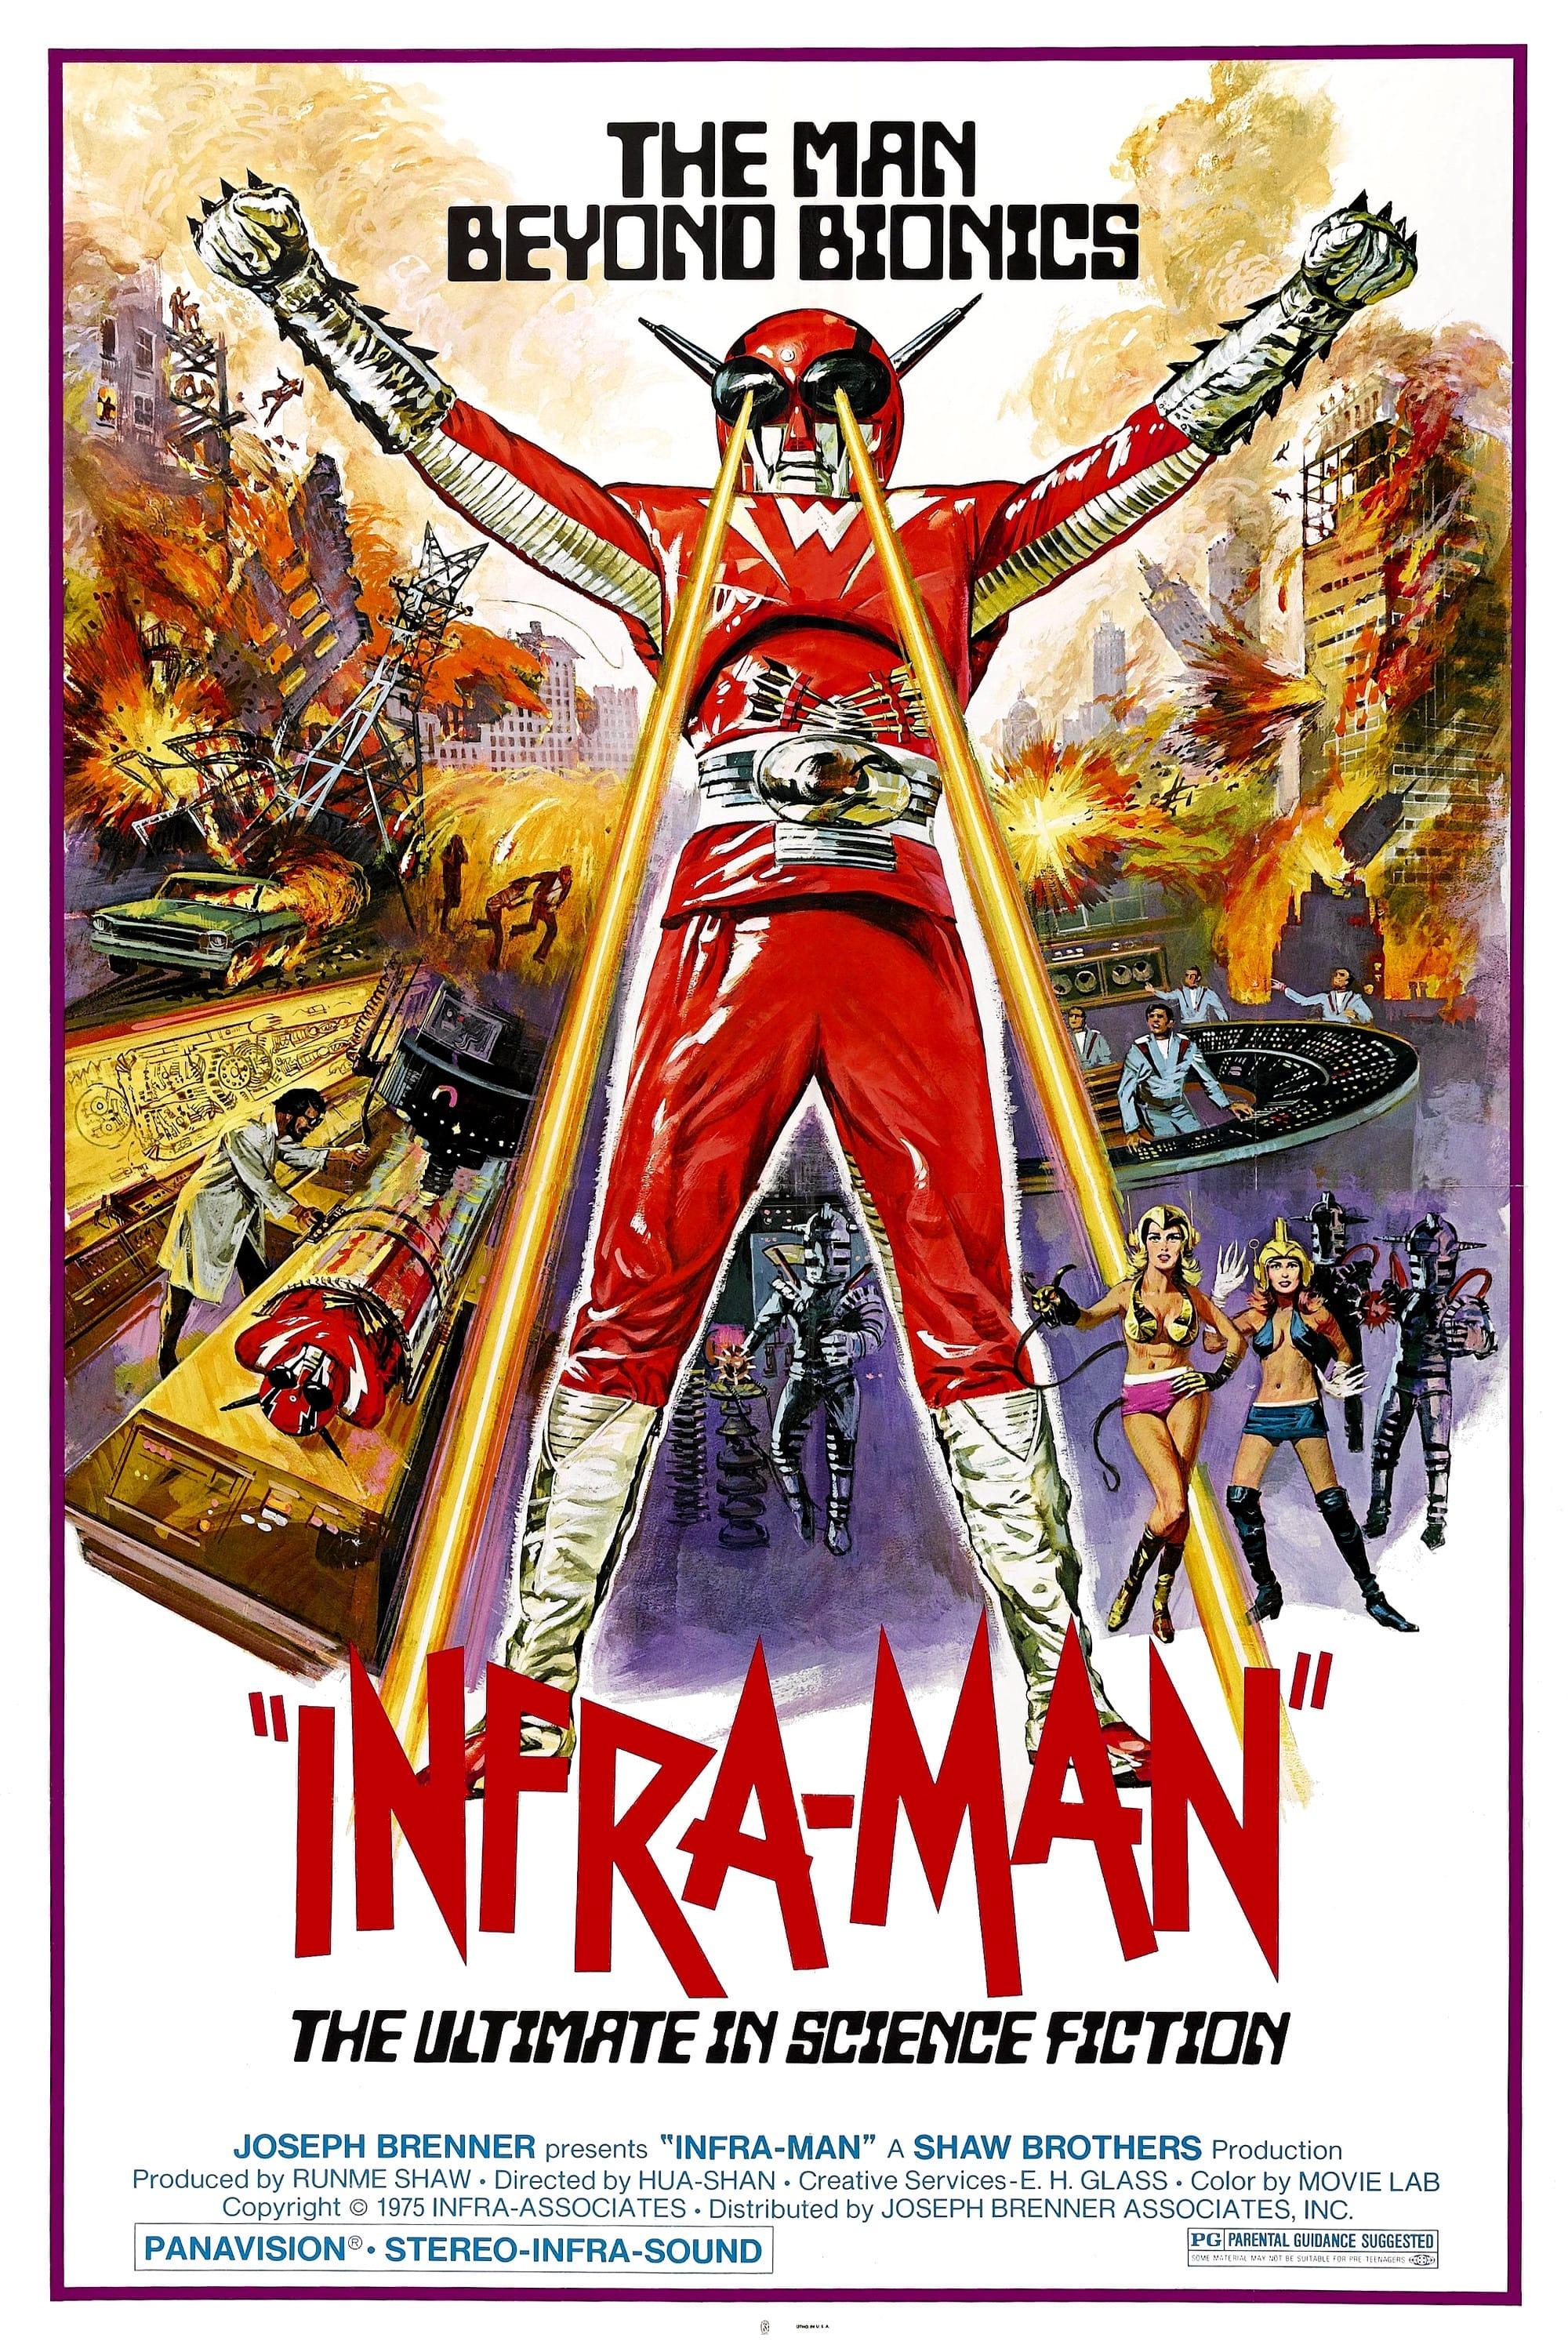 The Super Inframan poster